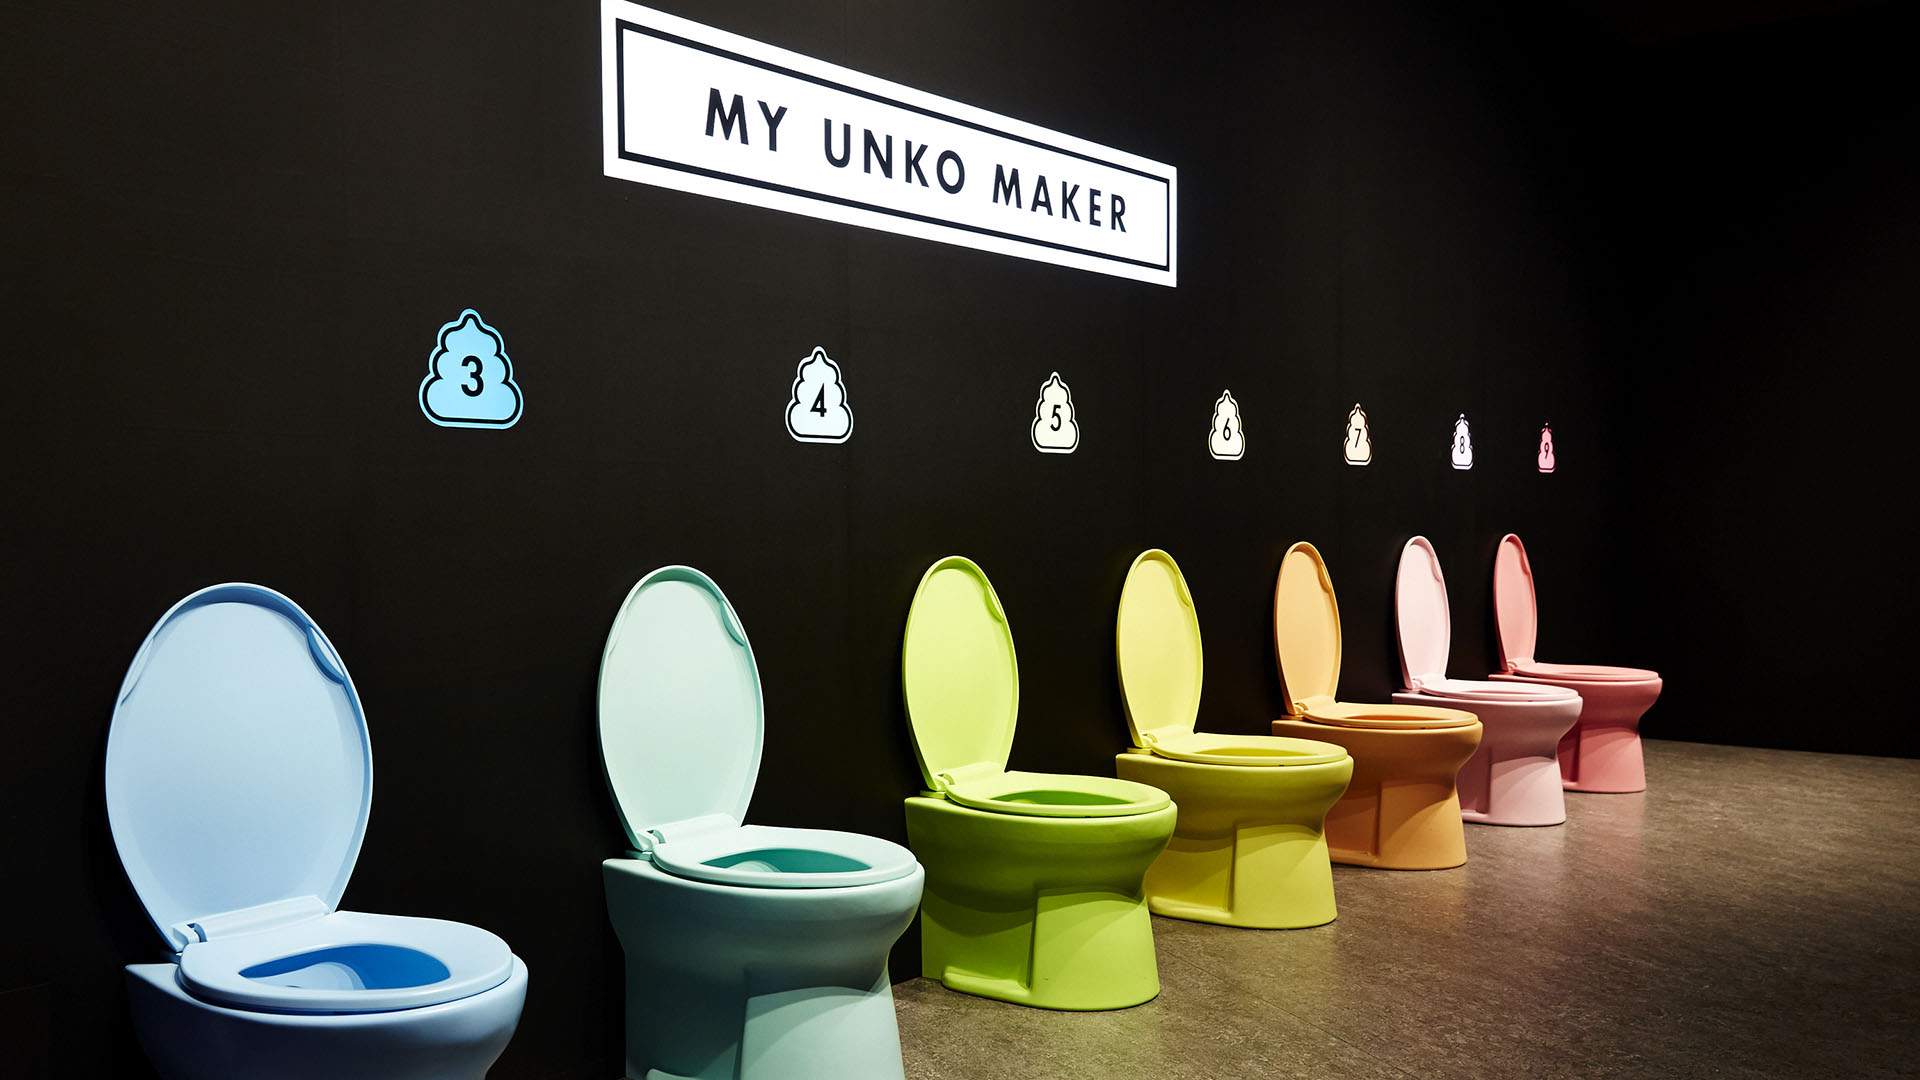 Unko Museum: The Kawaii Poop Experience